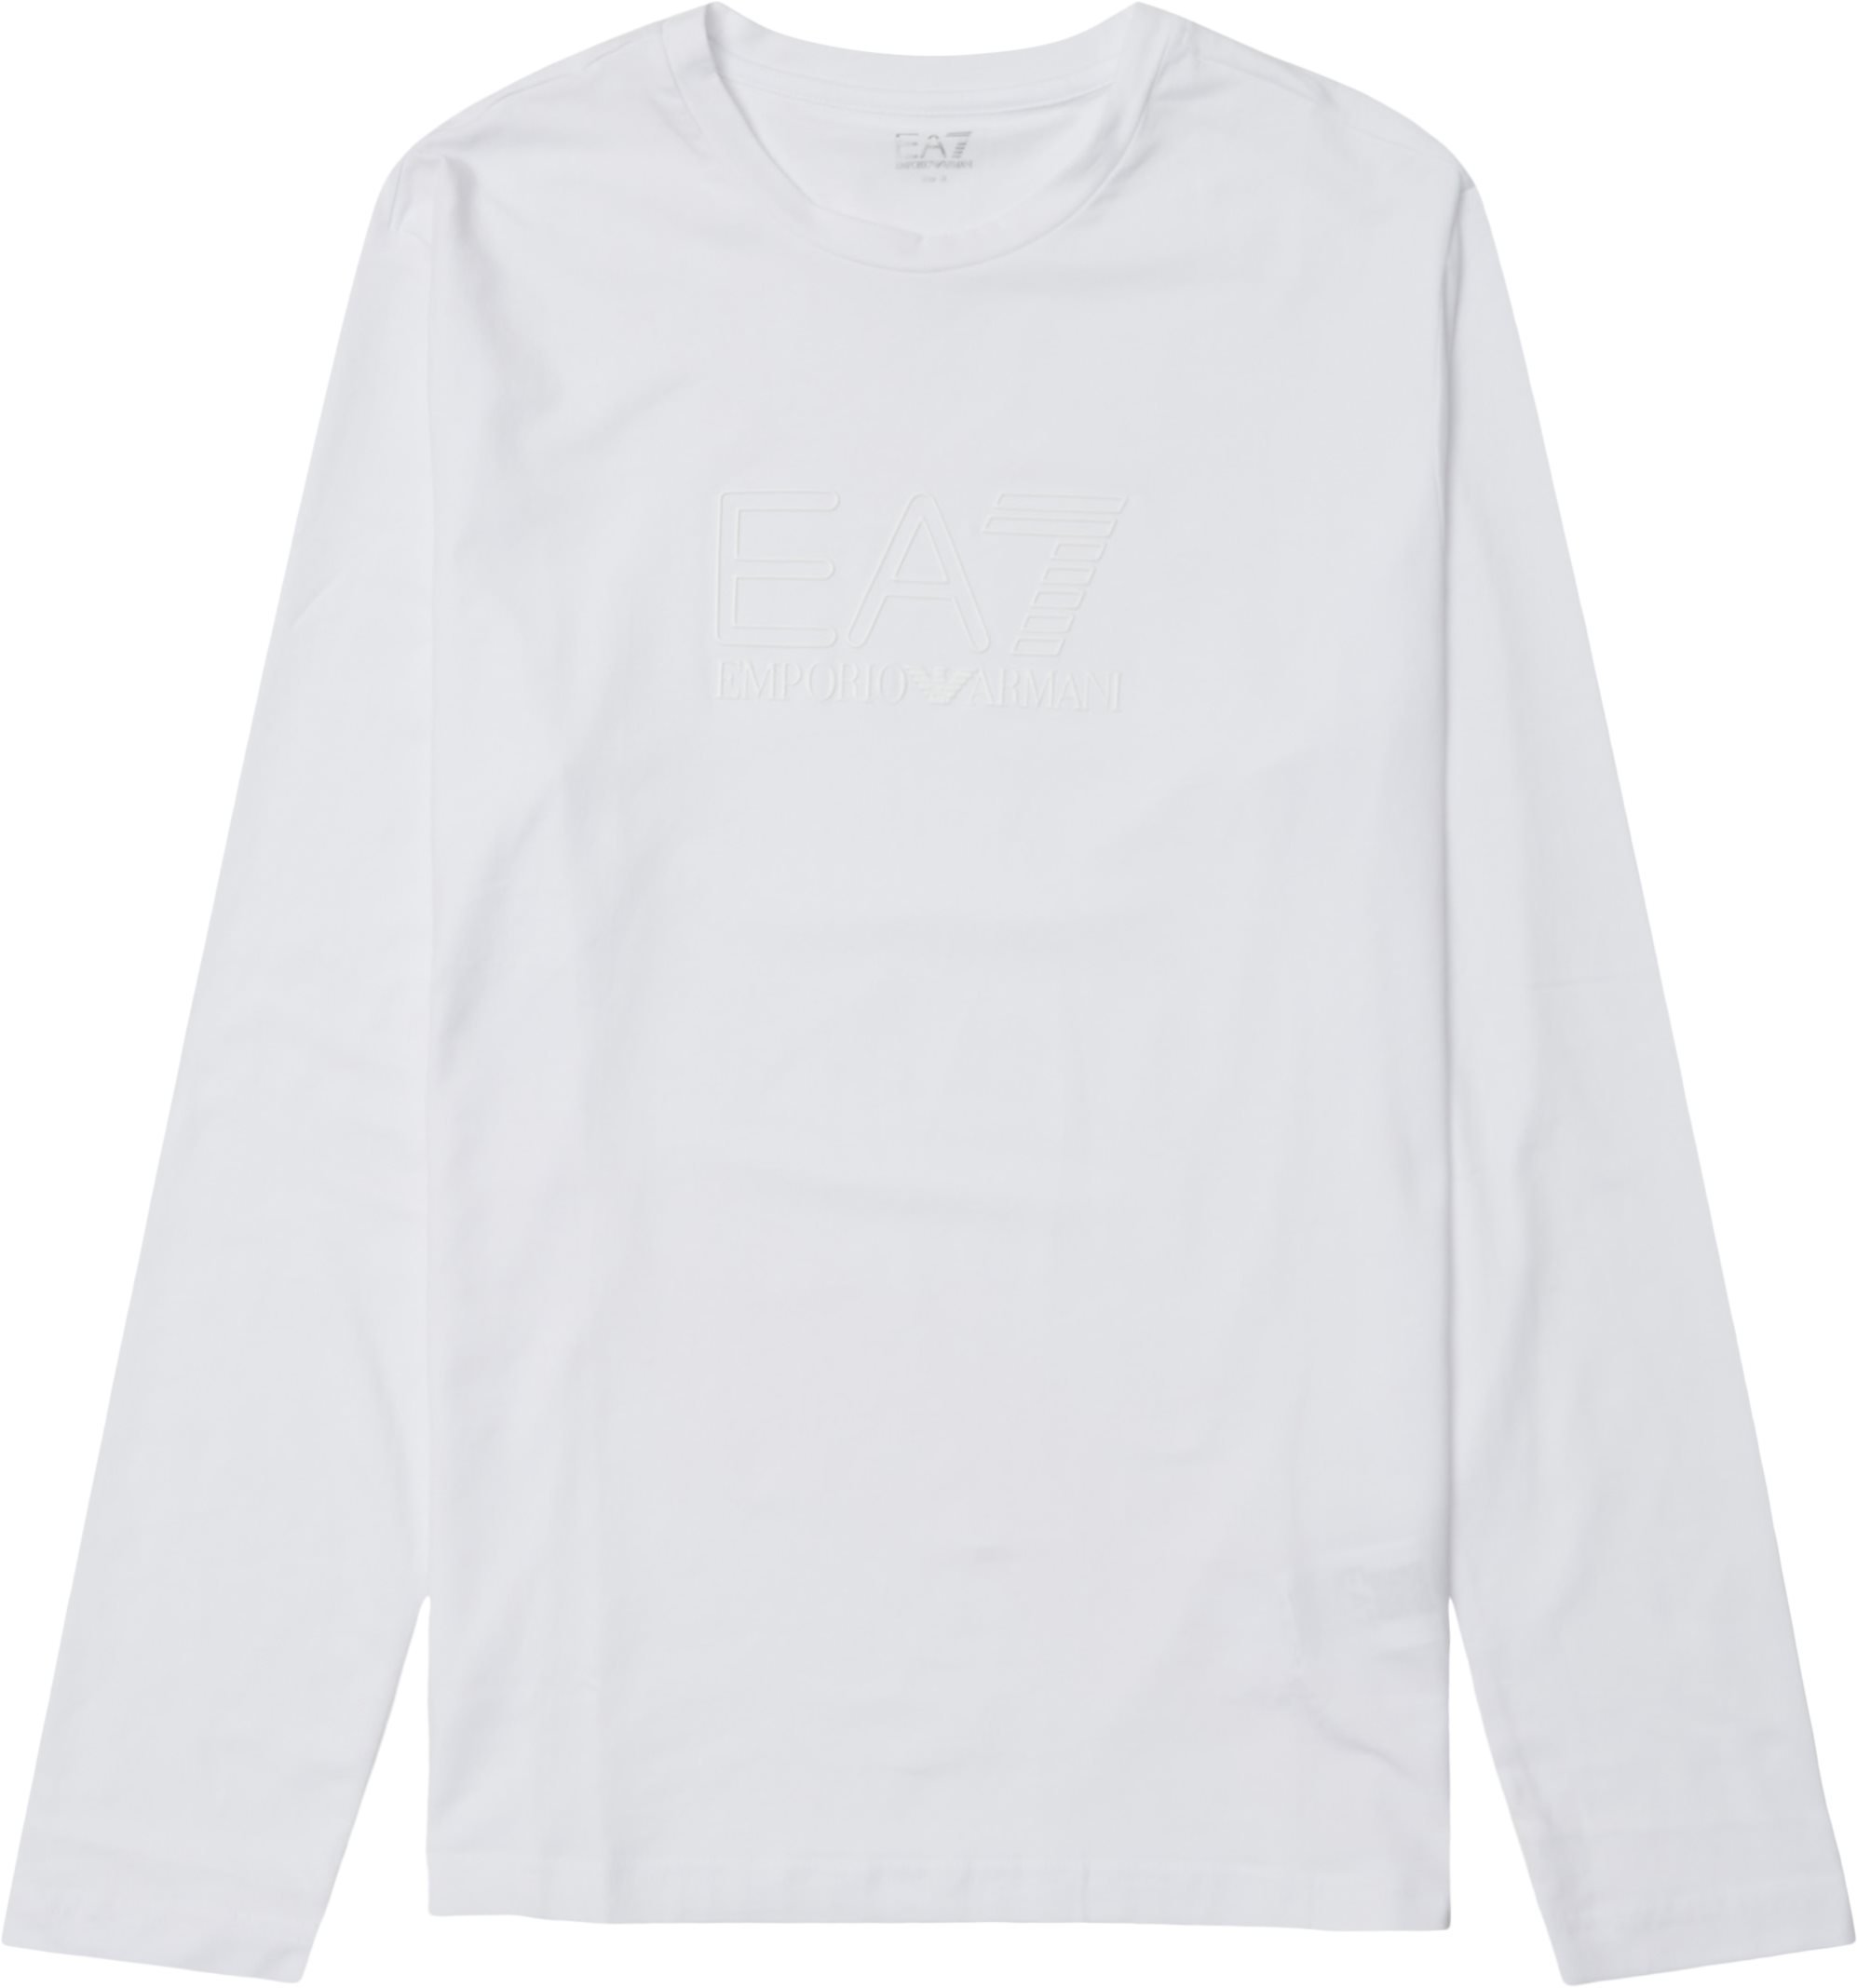 Pj03z-3lpt64 - T-shirts - Regular fit - Hvid